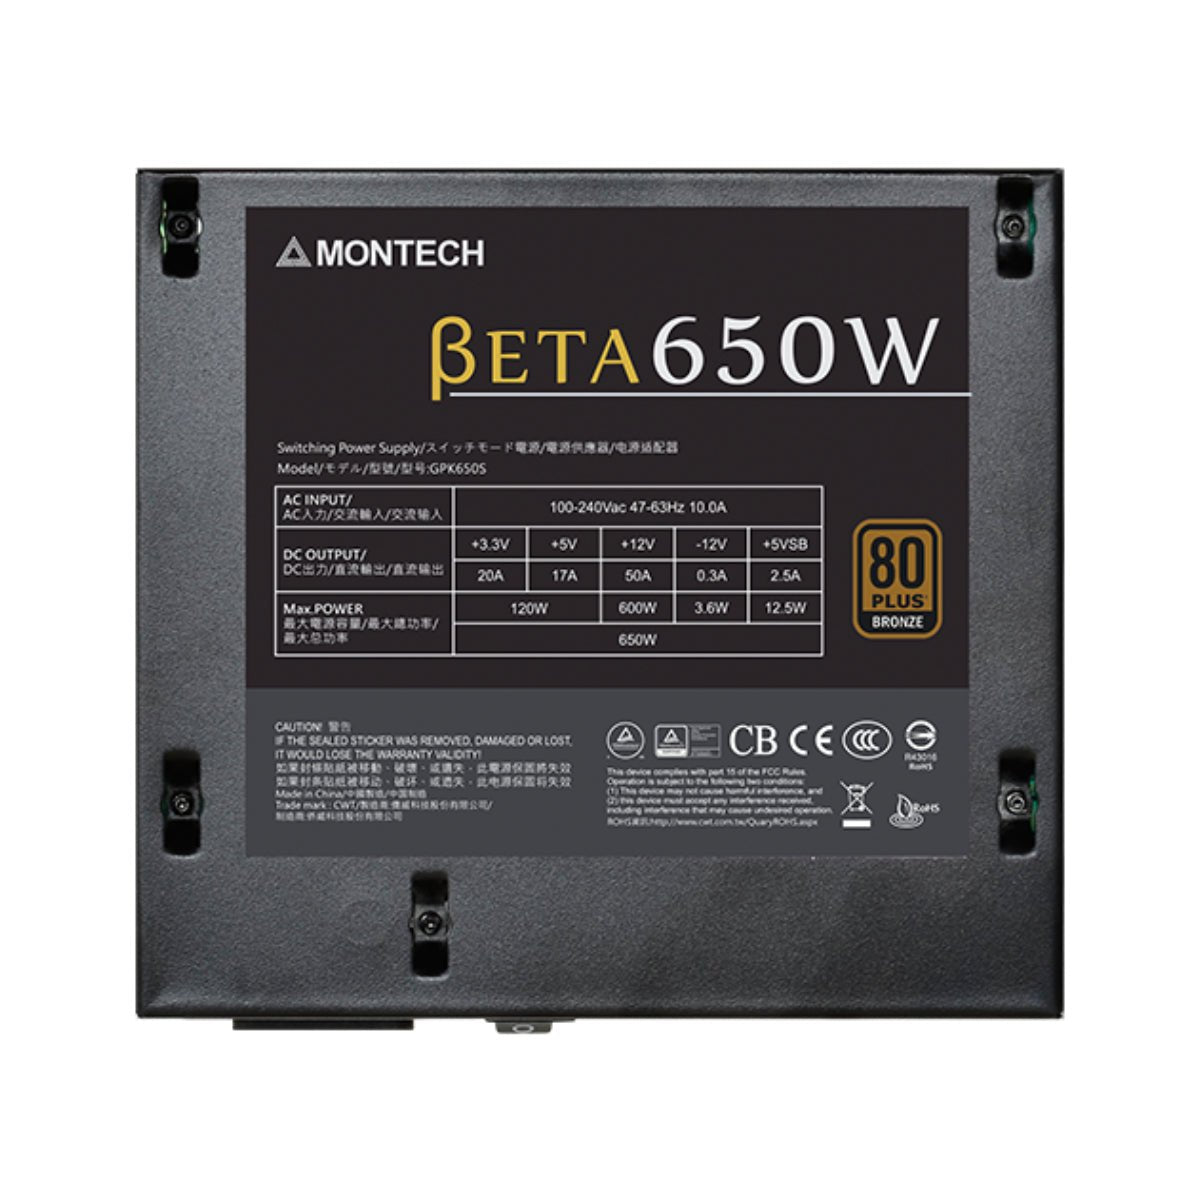 Montech BETA 650W 80+ Bronze Non-Modular Power Supply - Store 974 | ستور ٩٧٤